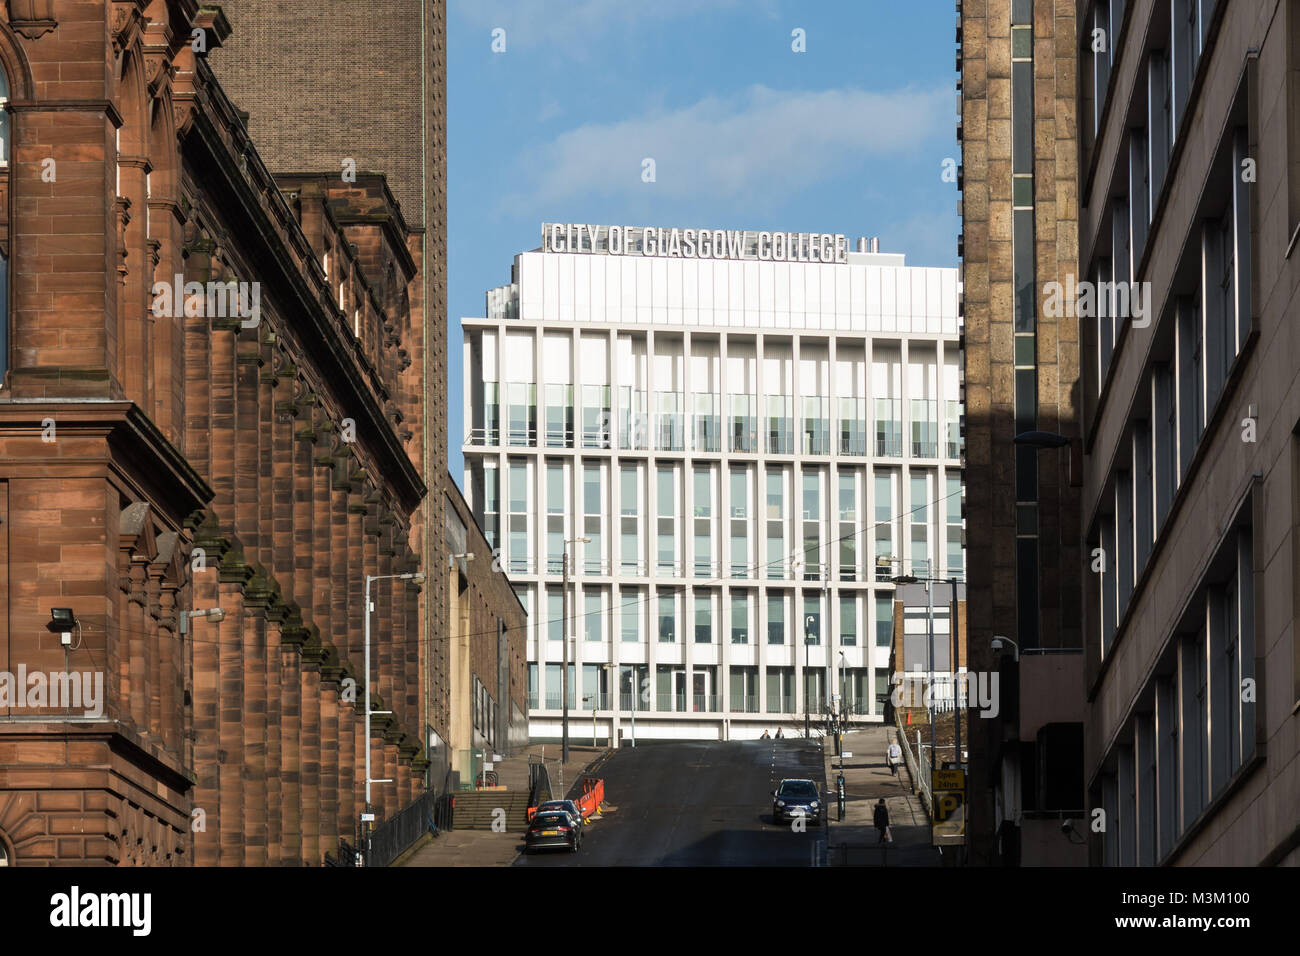 City of Glasgow College, Glasgow, Scotland, UK Stock Photo